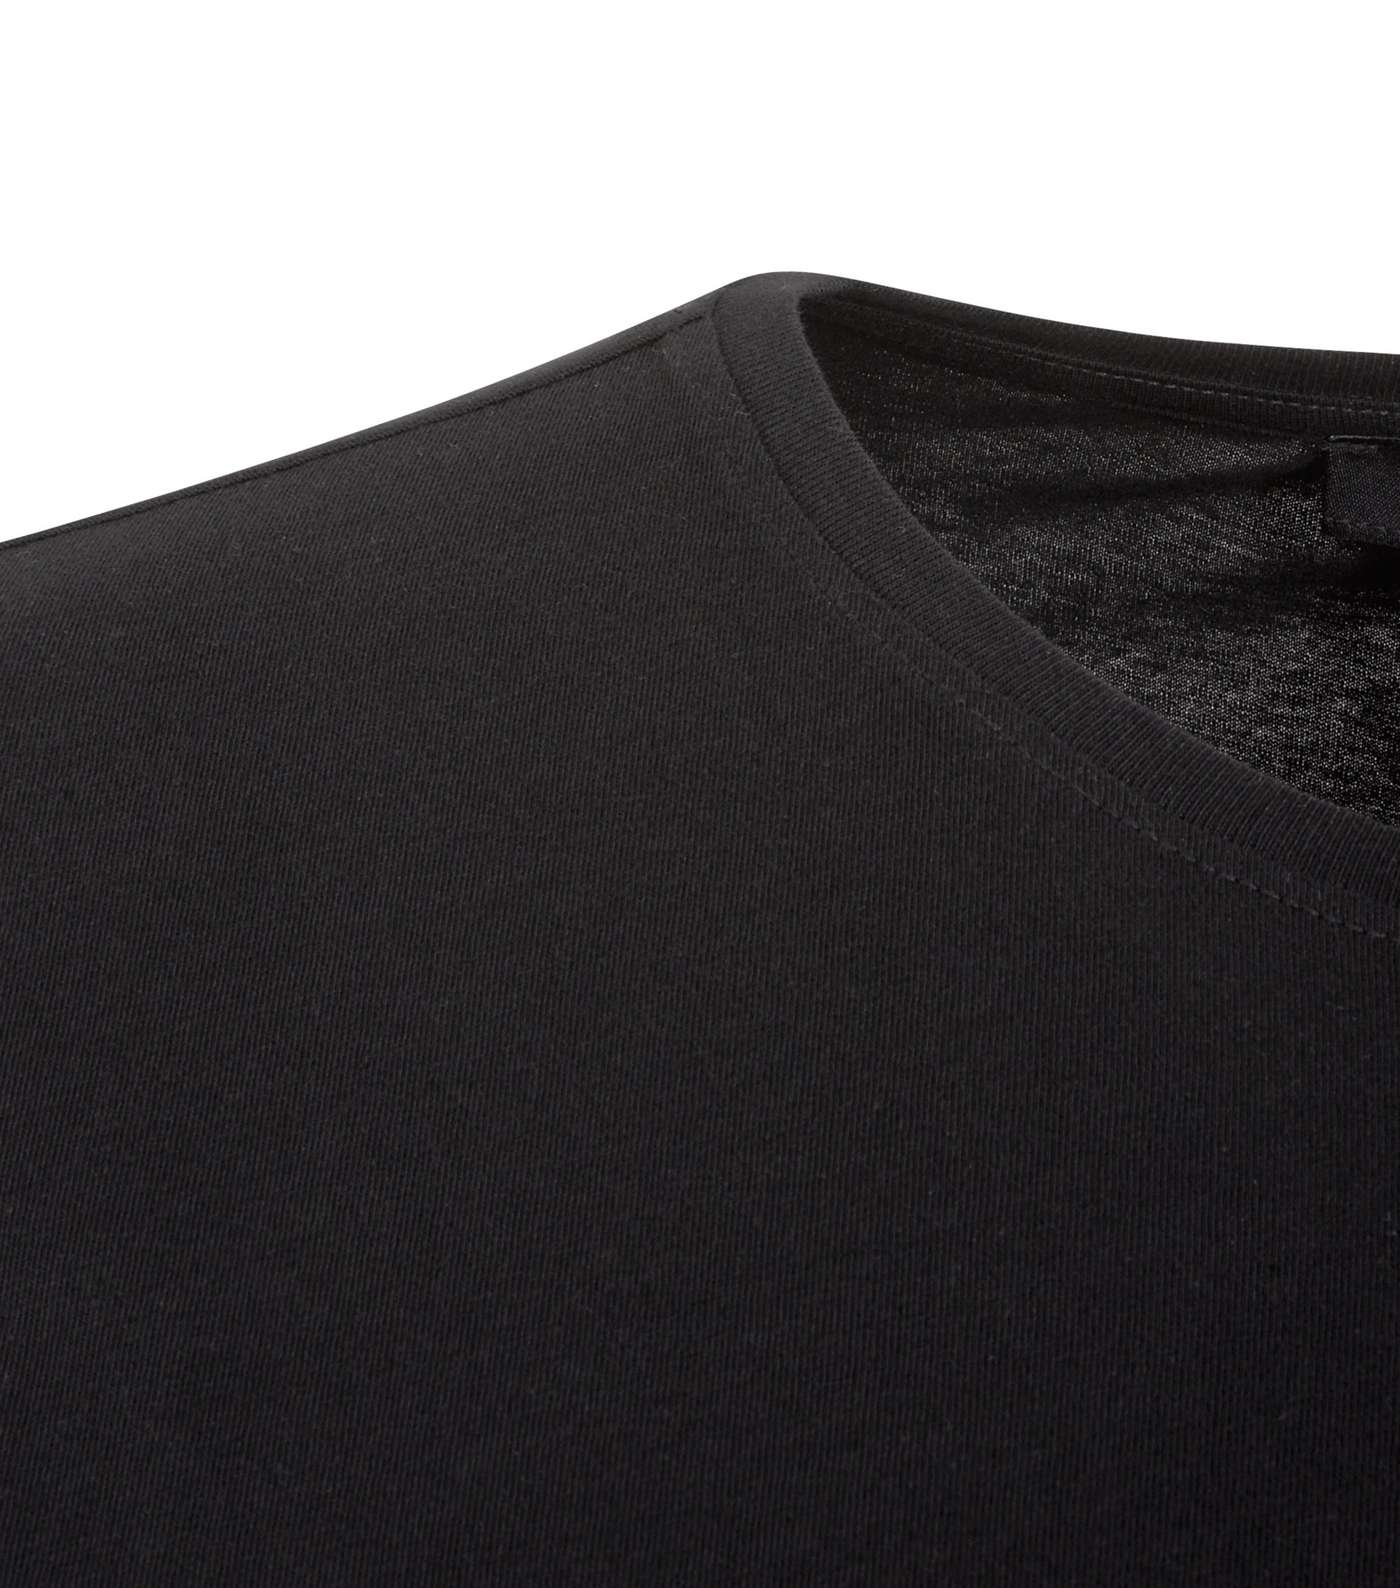 Curves Black Crew Neck Short Sleeve T-Shirt Image 3